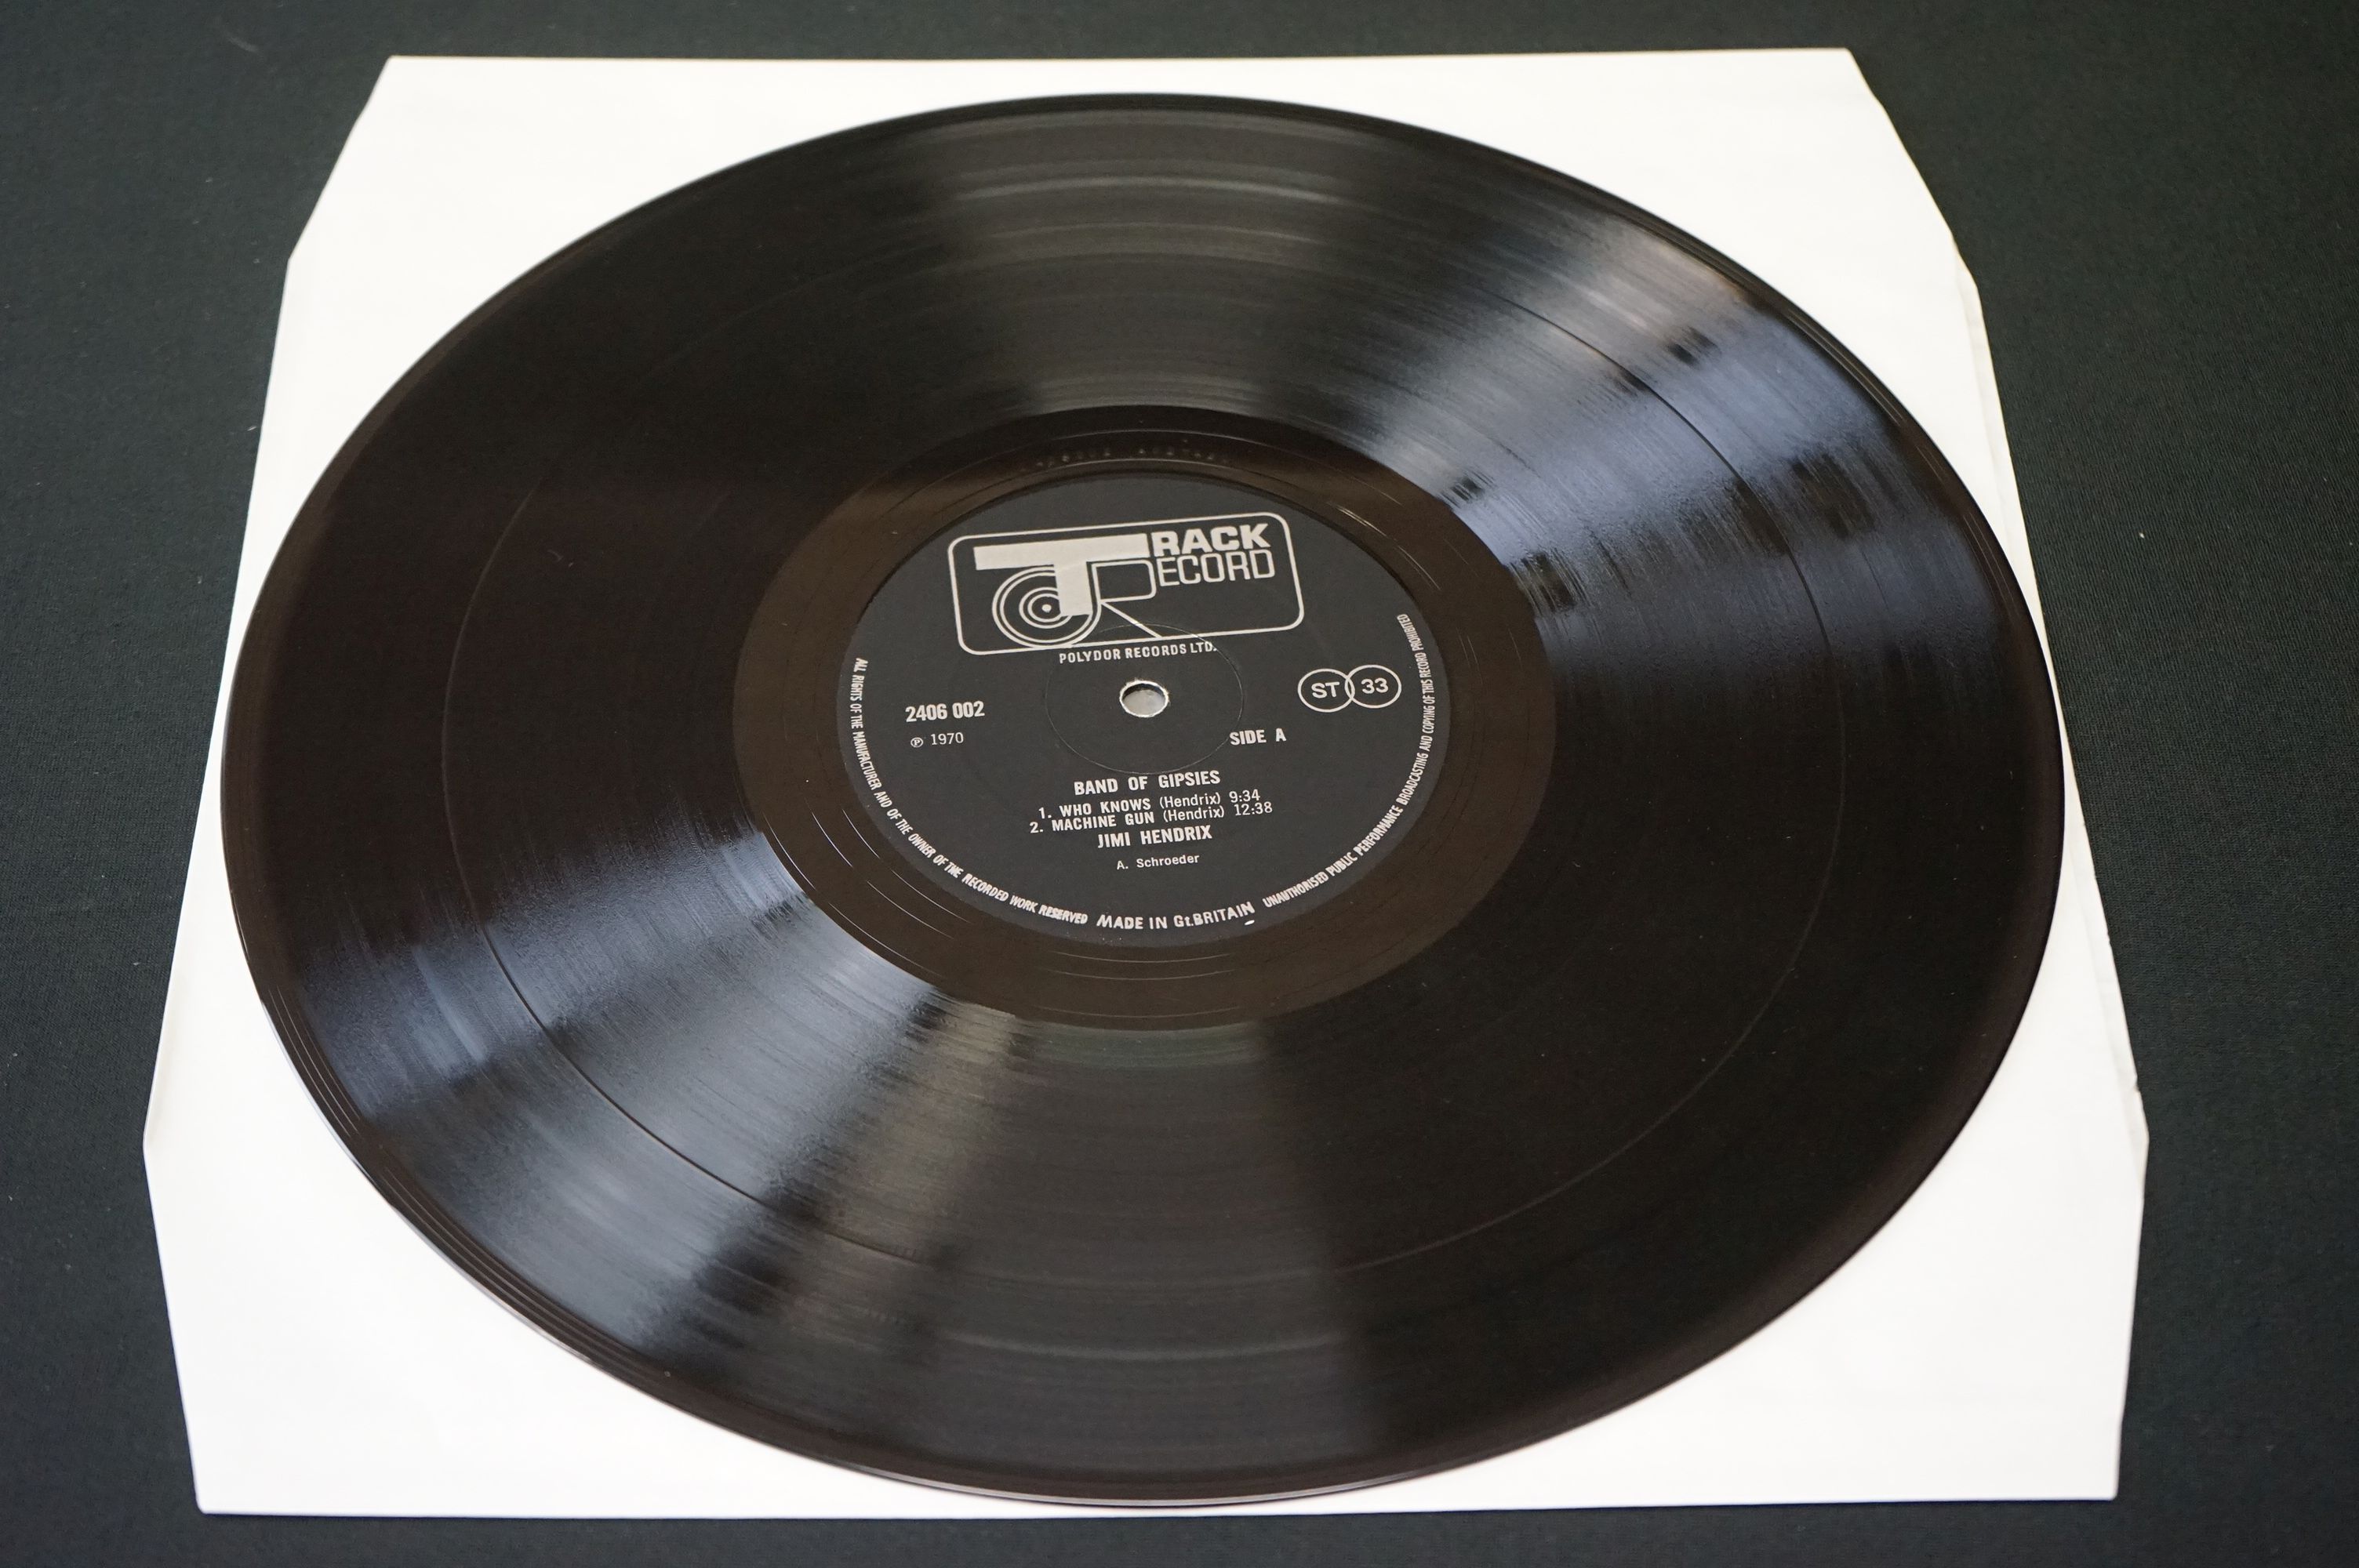 Vinyl - Jimi Hendrix Band Of Gypsys on Track 2406 002 'puppet' sleeve. Vg+ - Image 2 of 6